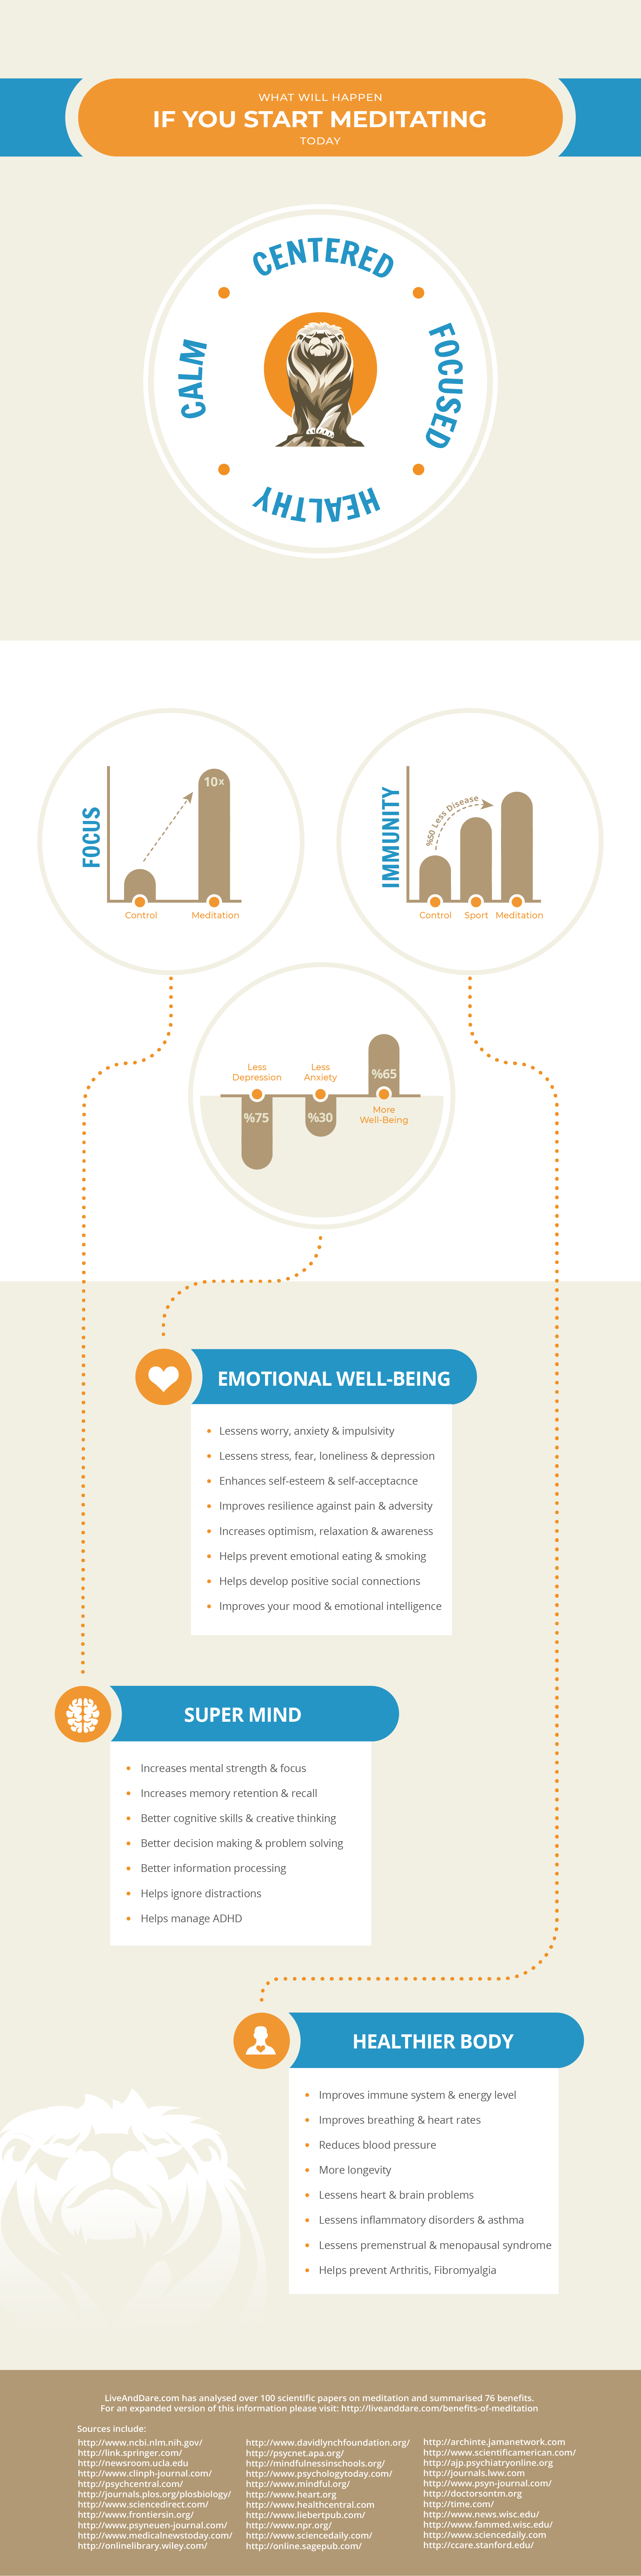 Benefits of Meditation Infographic